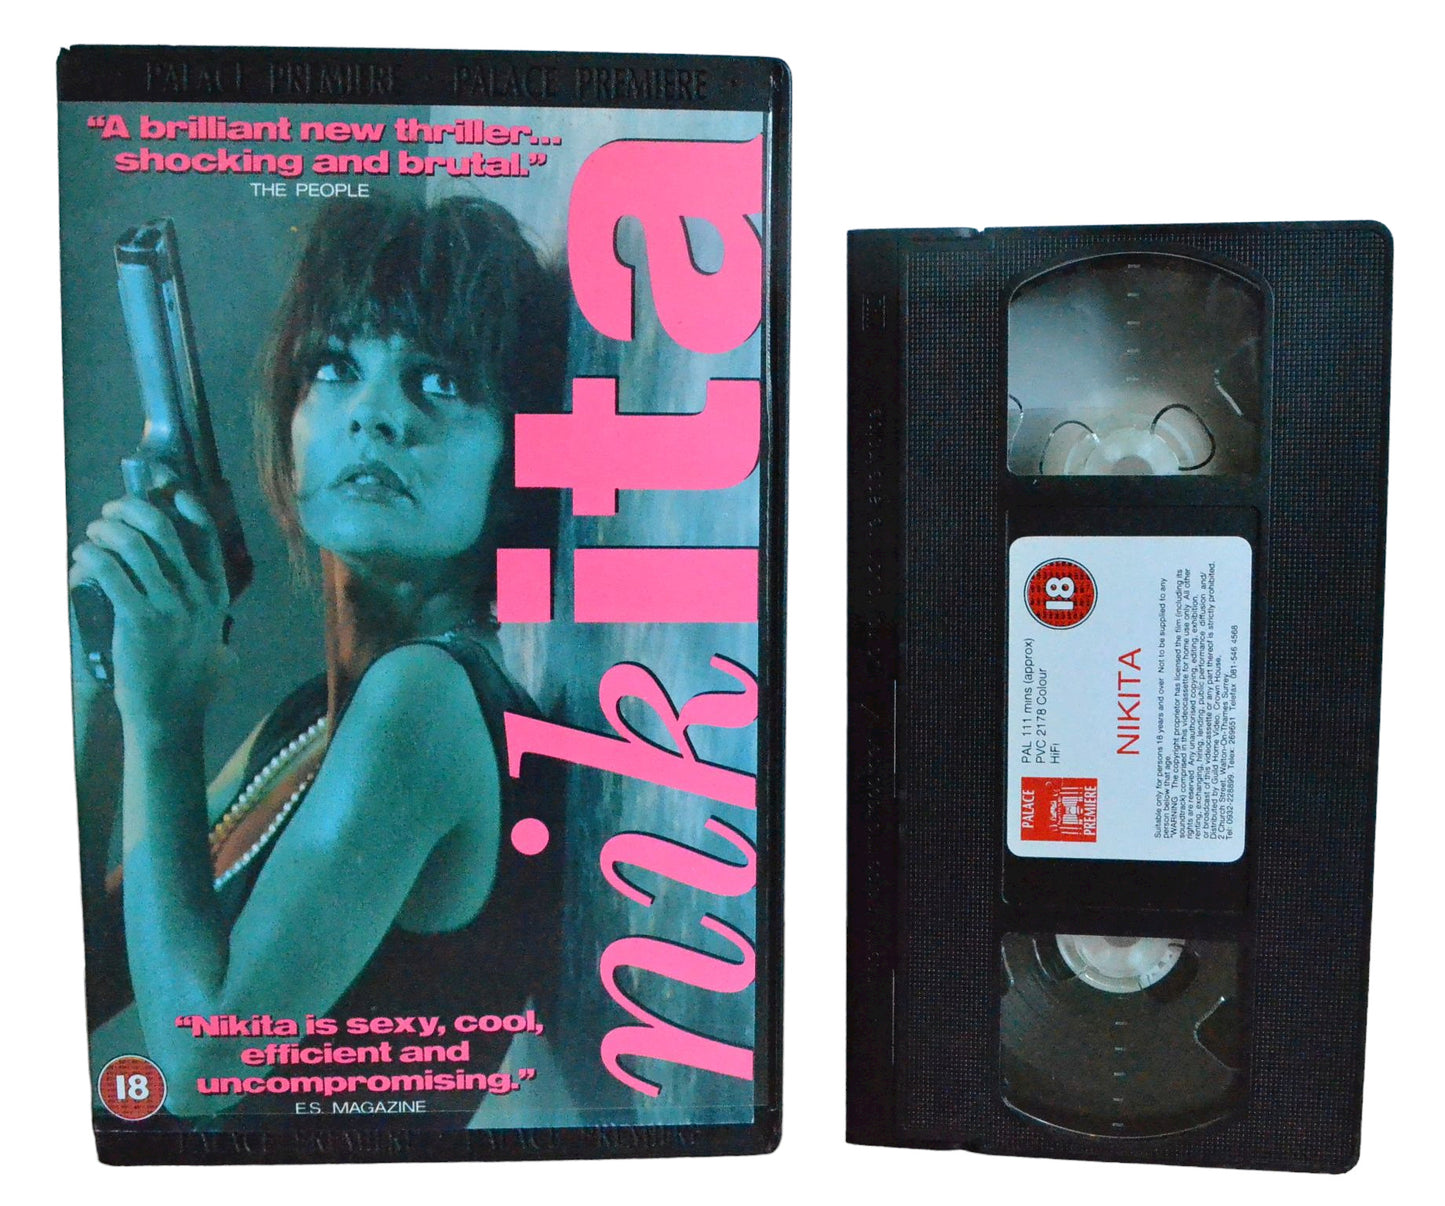 Nikita (A Briliant New Thriller) - Anne Parillaud - Palace Premiere - Large Box - PAL - VHS-